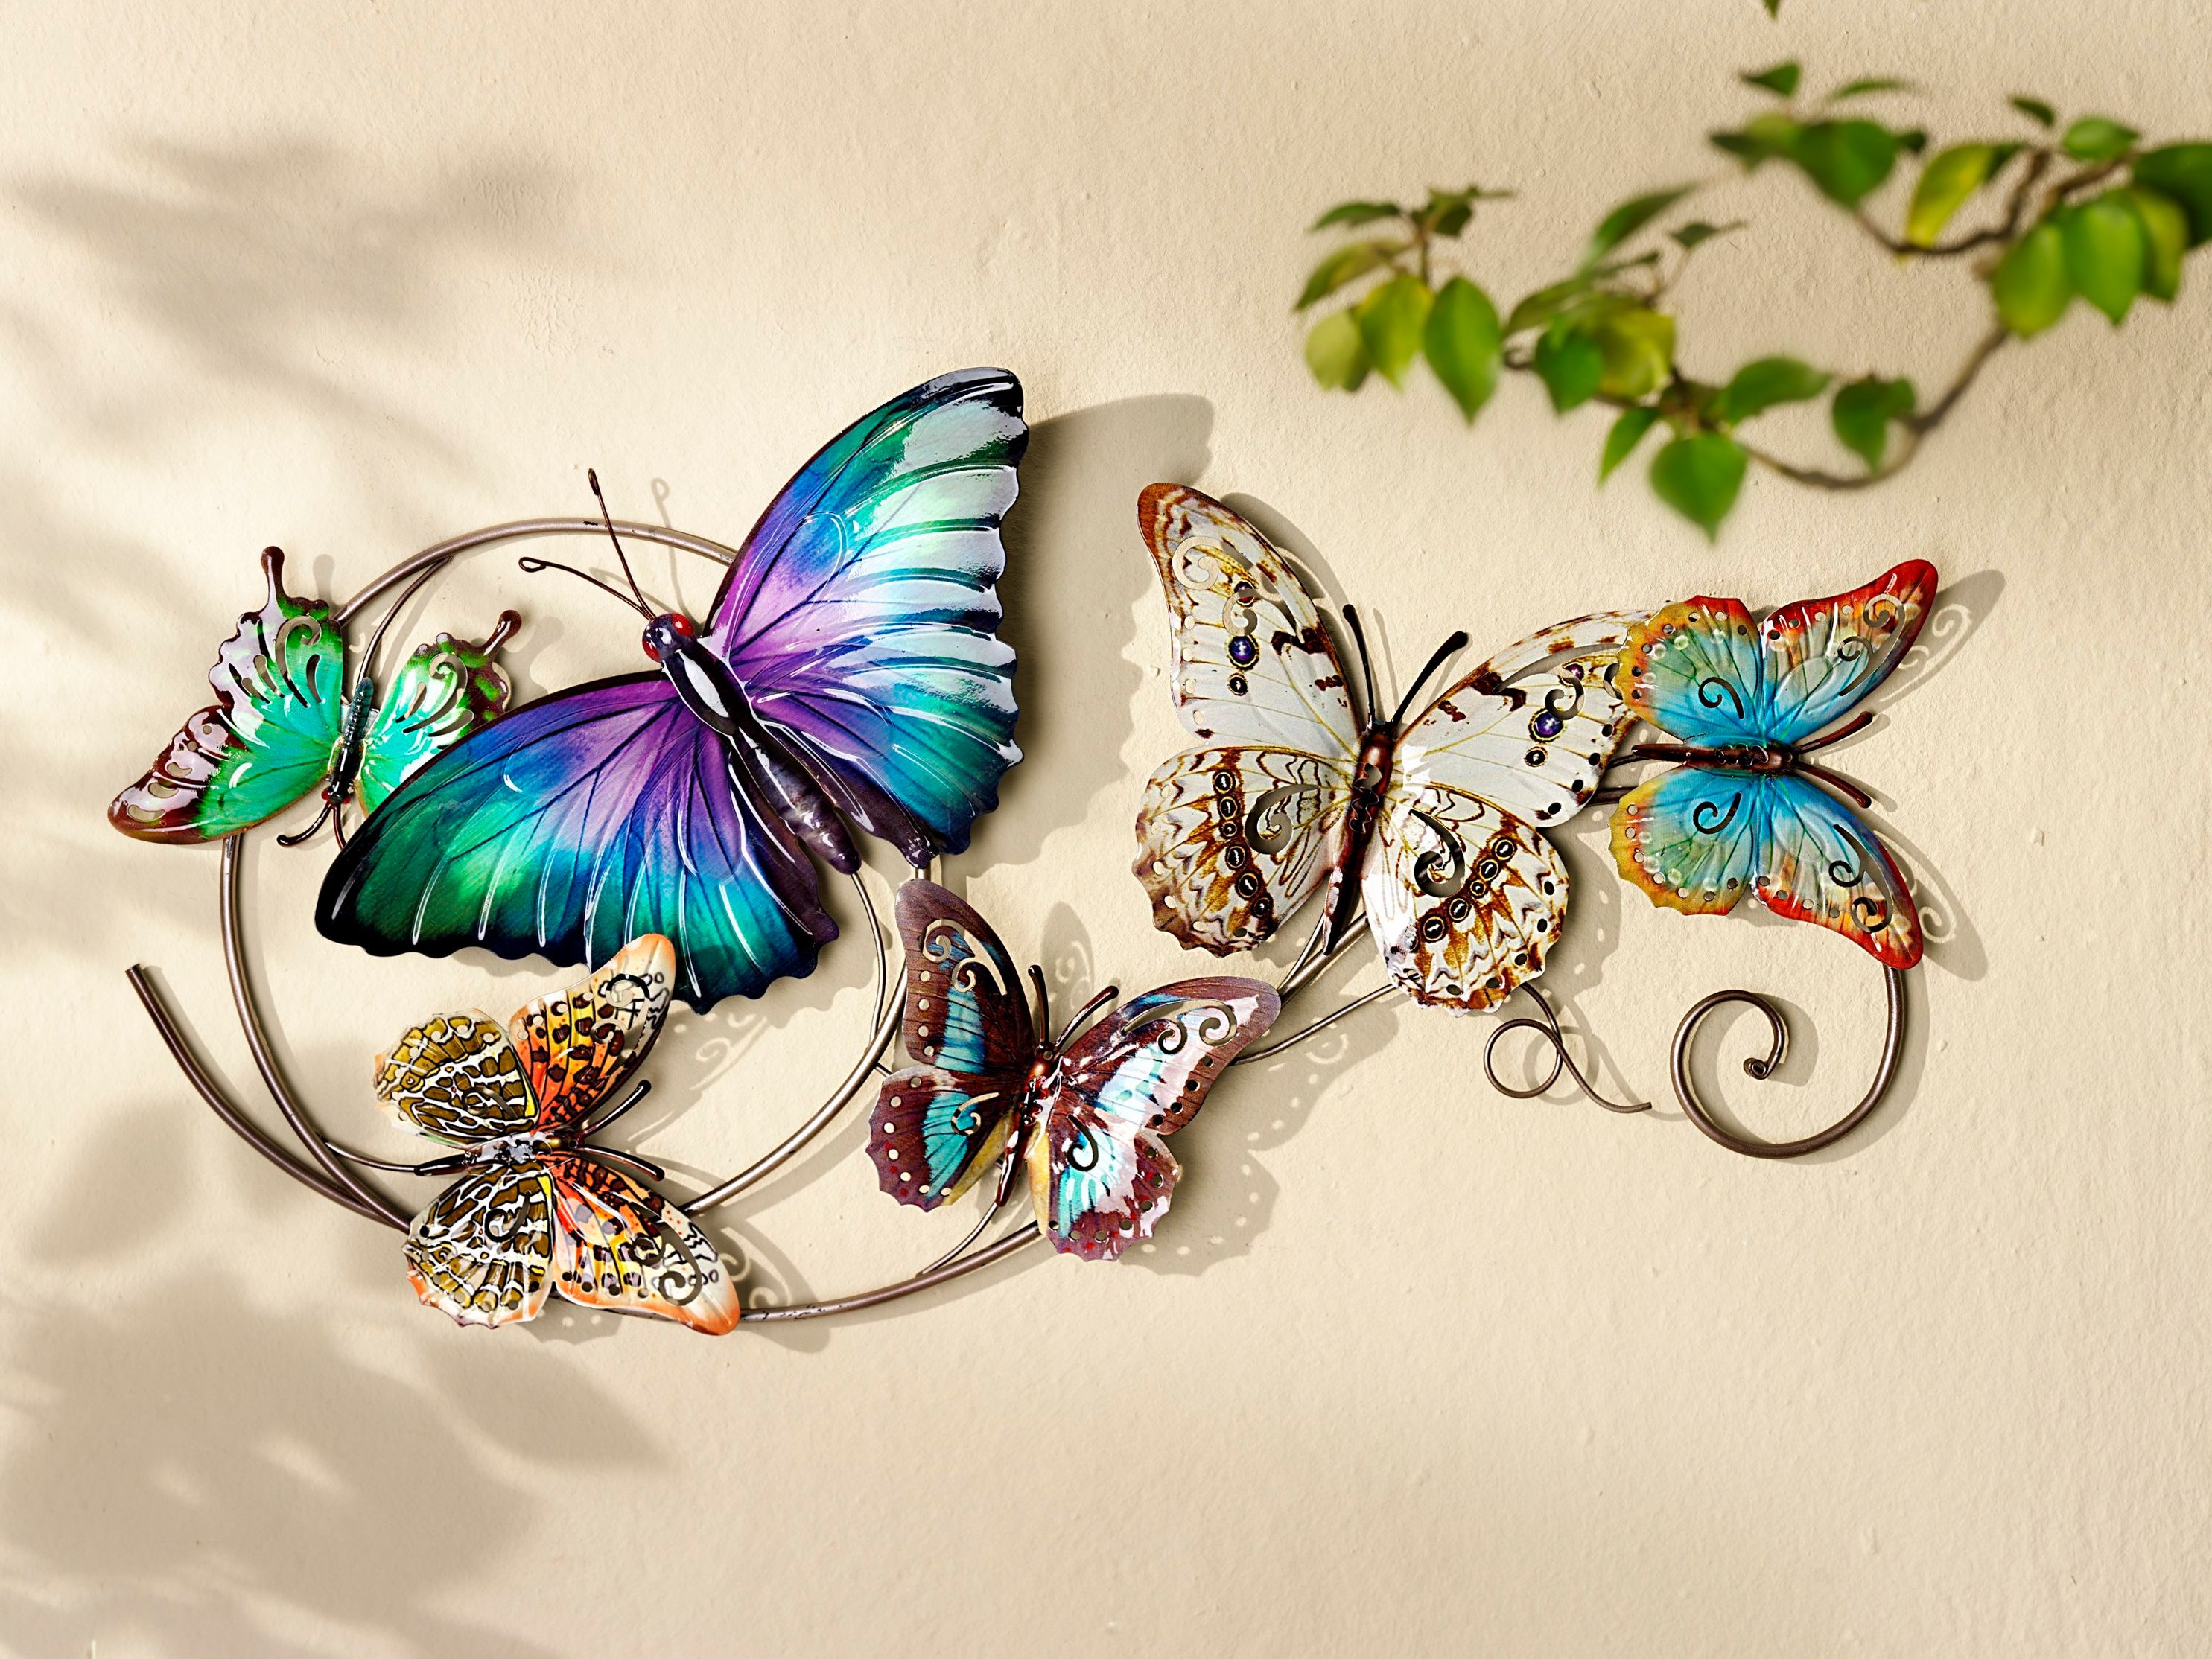 Wanddeko Schmetterlinge jetzt bei Weltbild.de bestellen